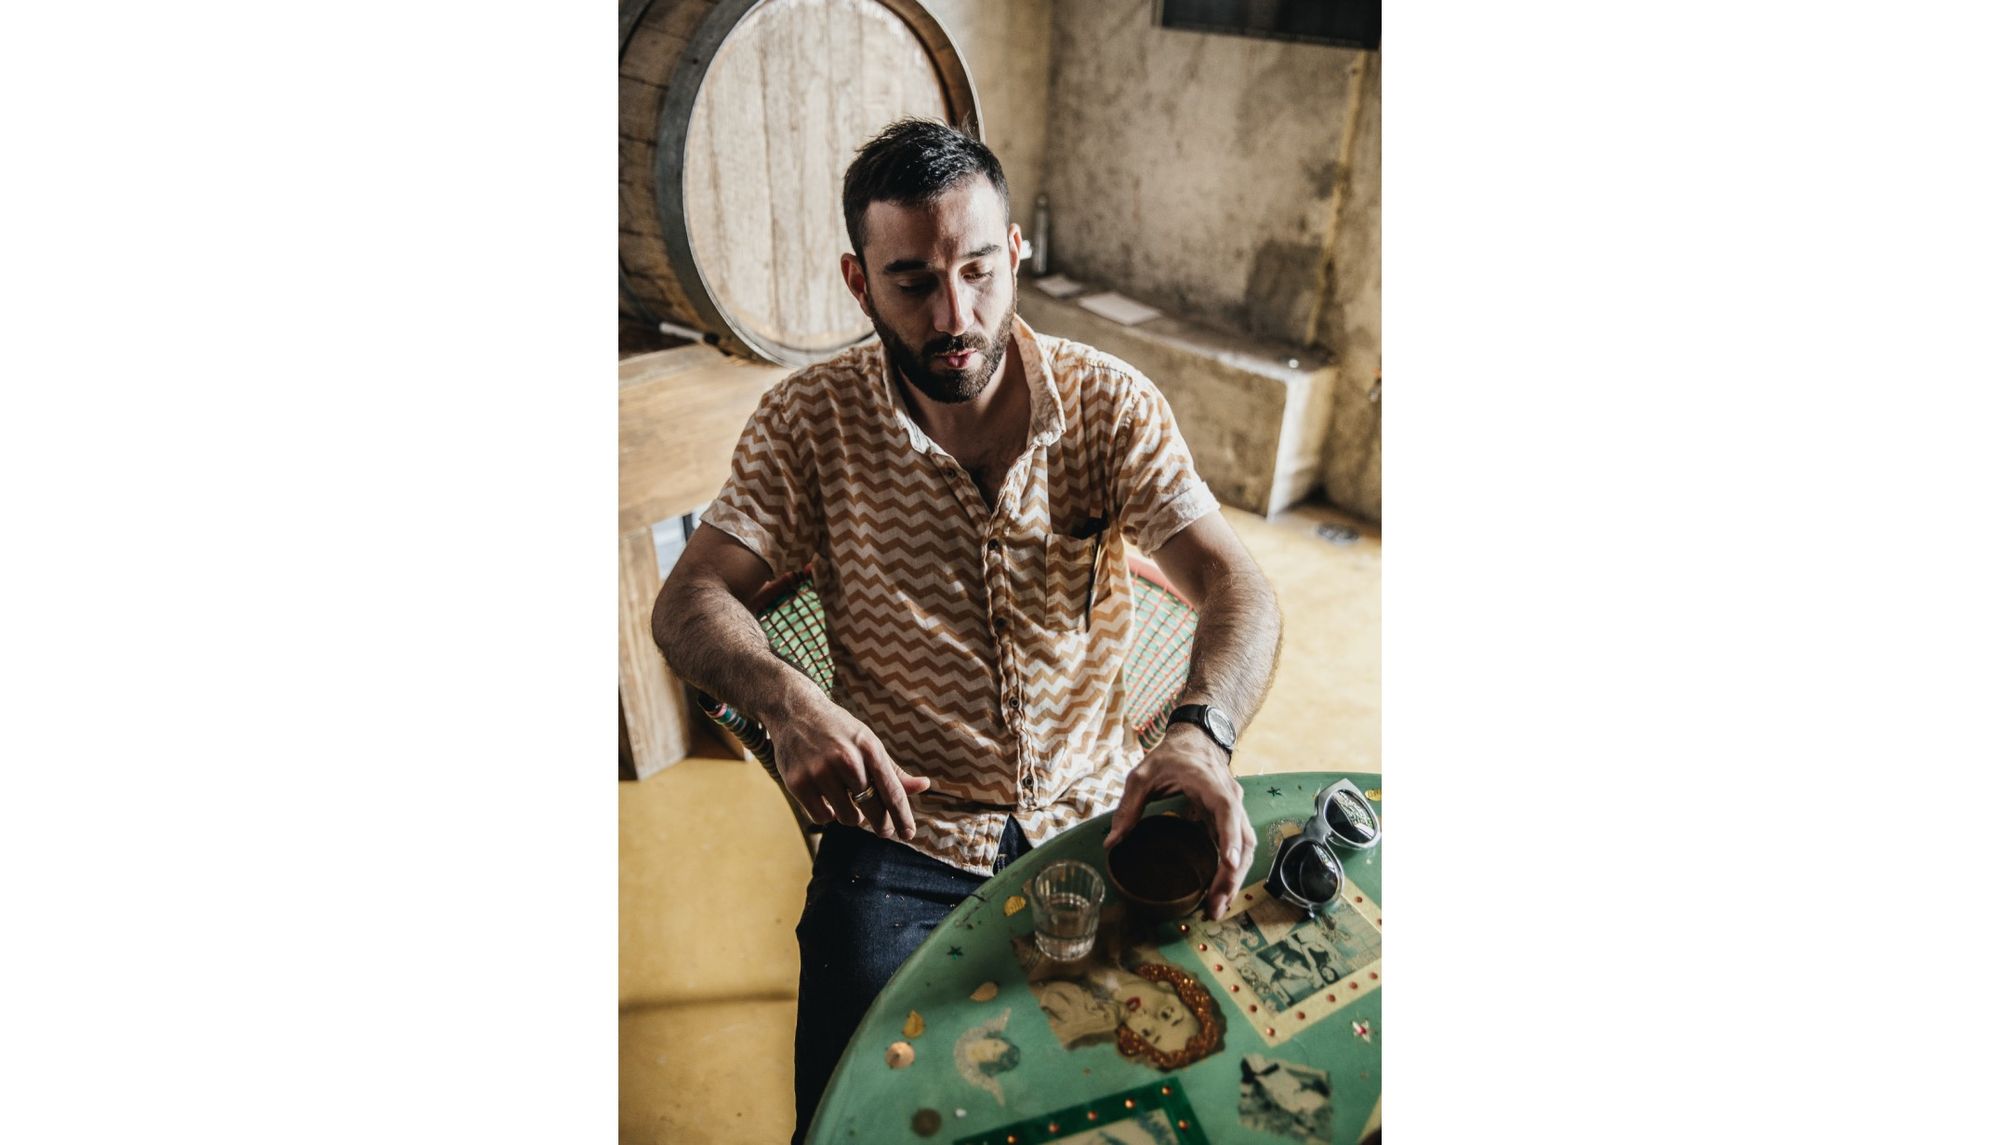 Authentic Mexican Food & Agave-Based Spirits - La Mezcaleria